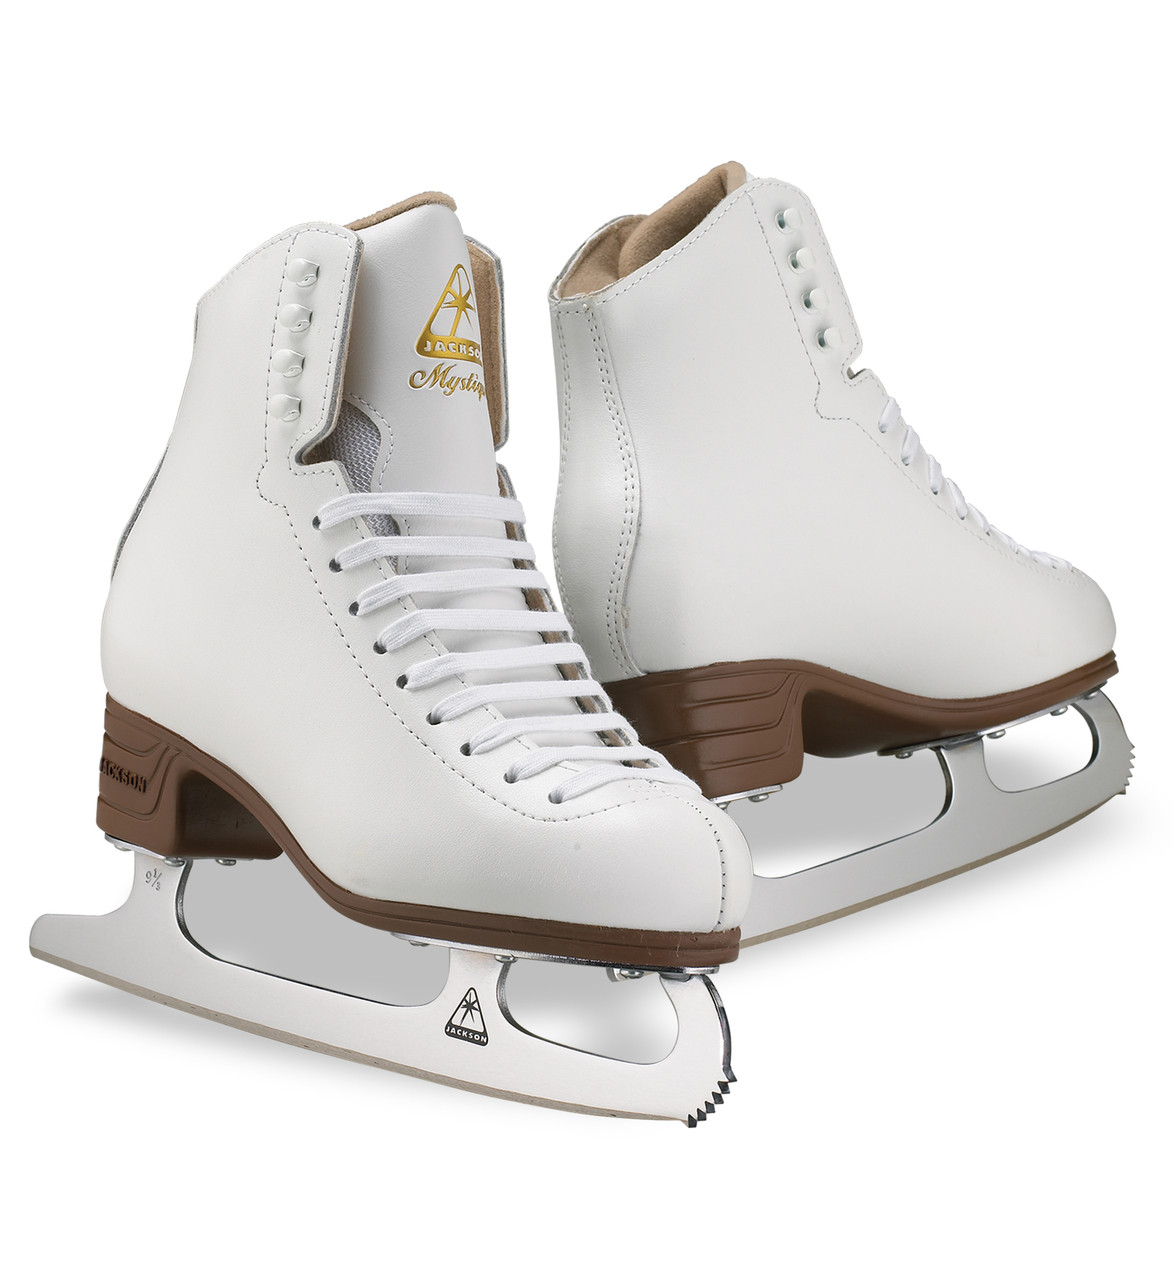 Free Blade Guards! Jackson Mystique Junior Ice Figure Skates For Girls 